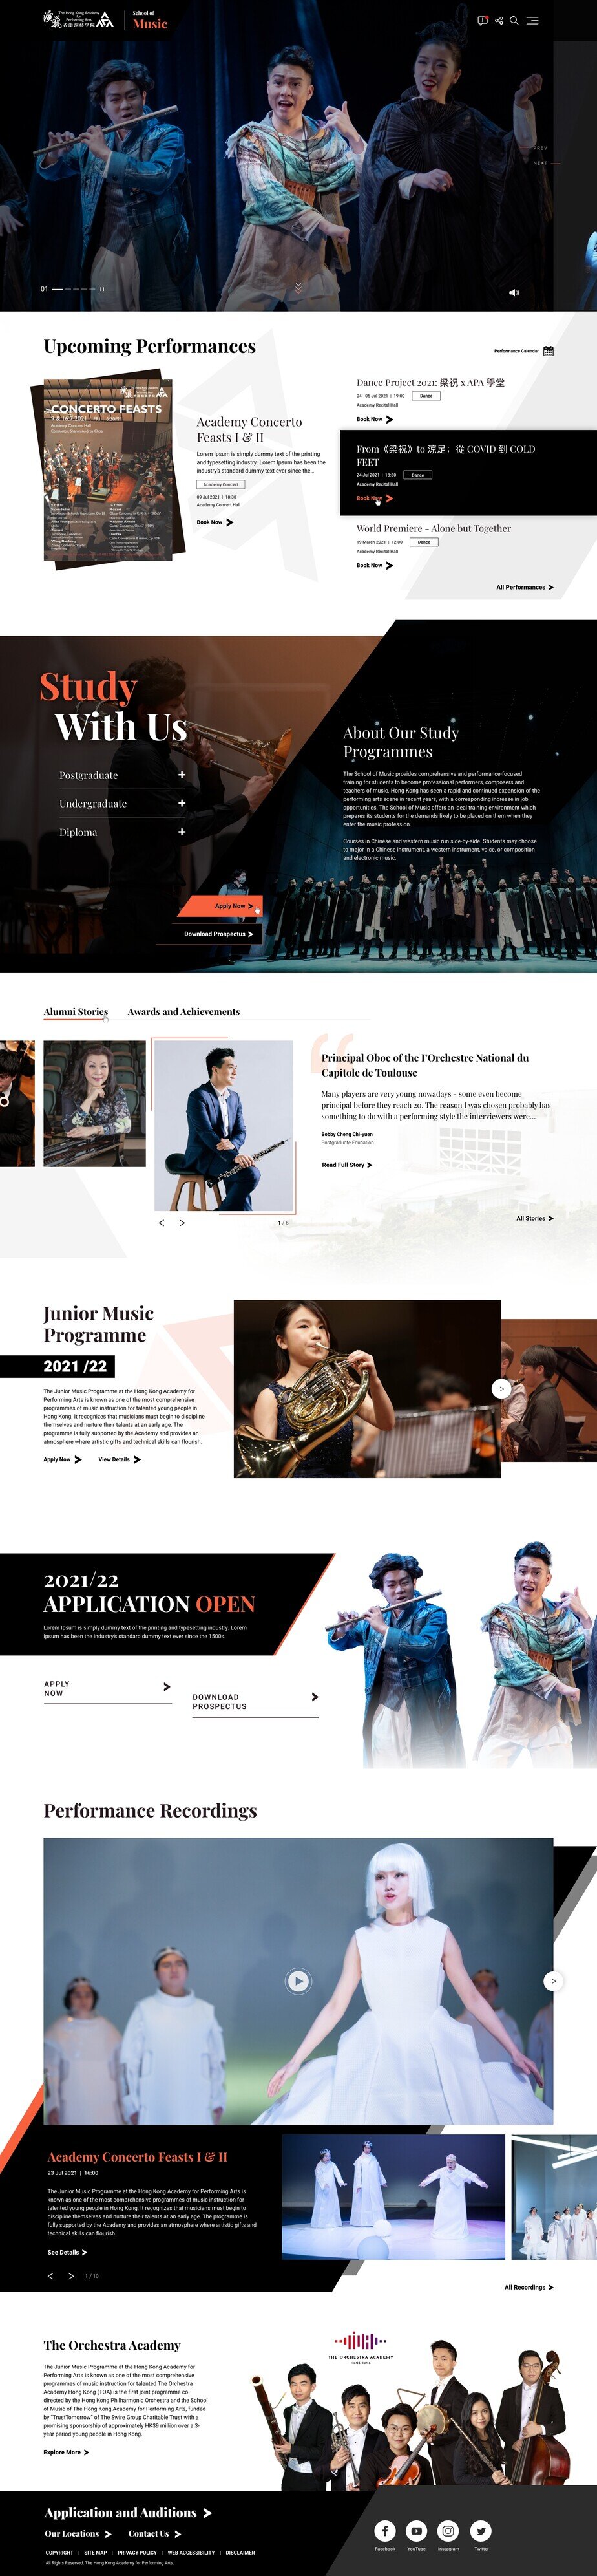 Hong Kong Academy for Performing Arts website screenshot for desktop version 2 of 7